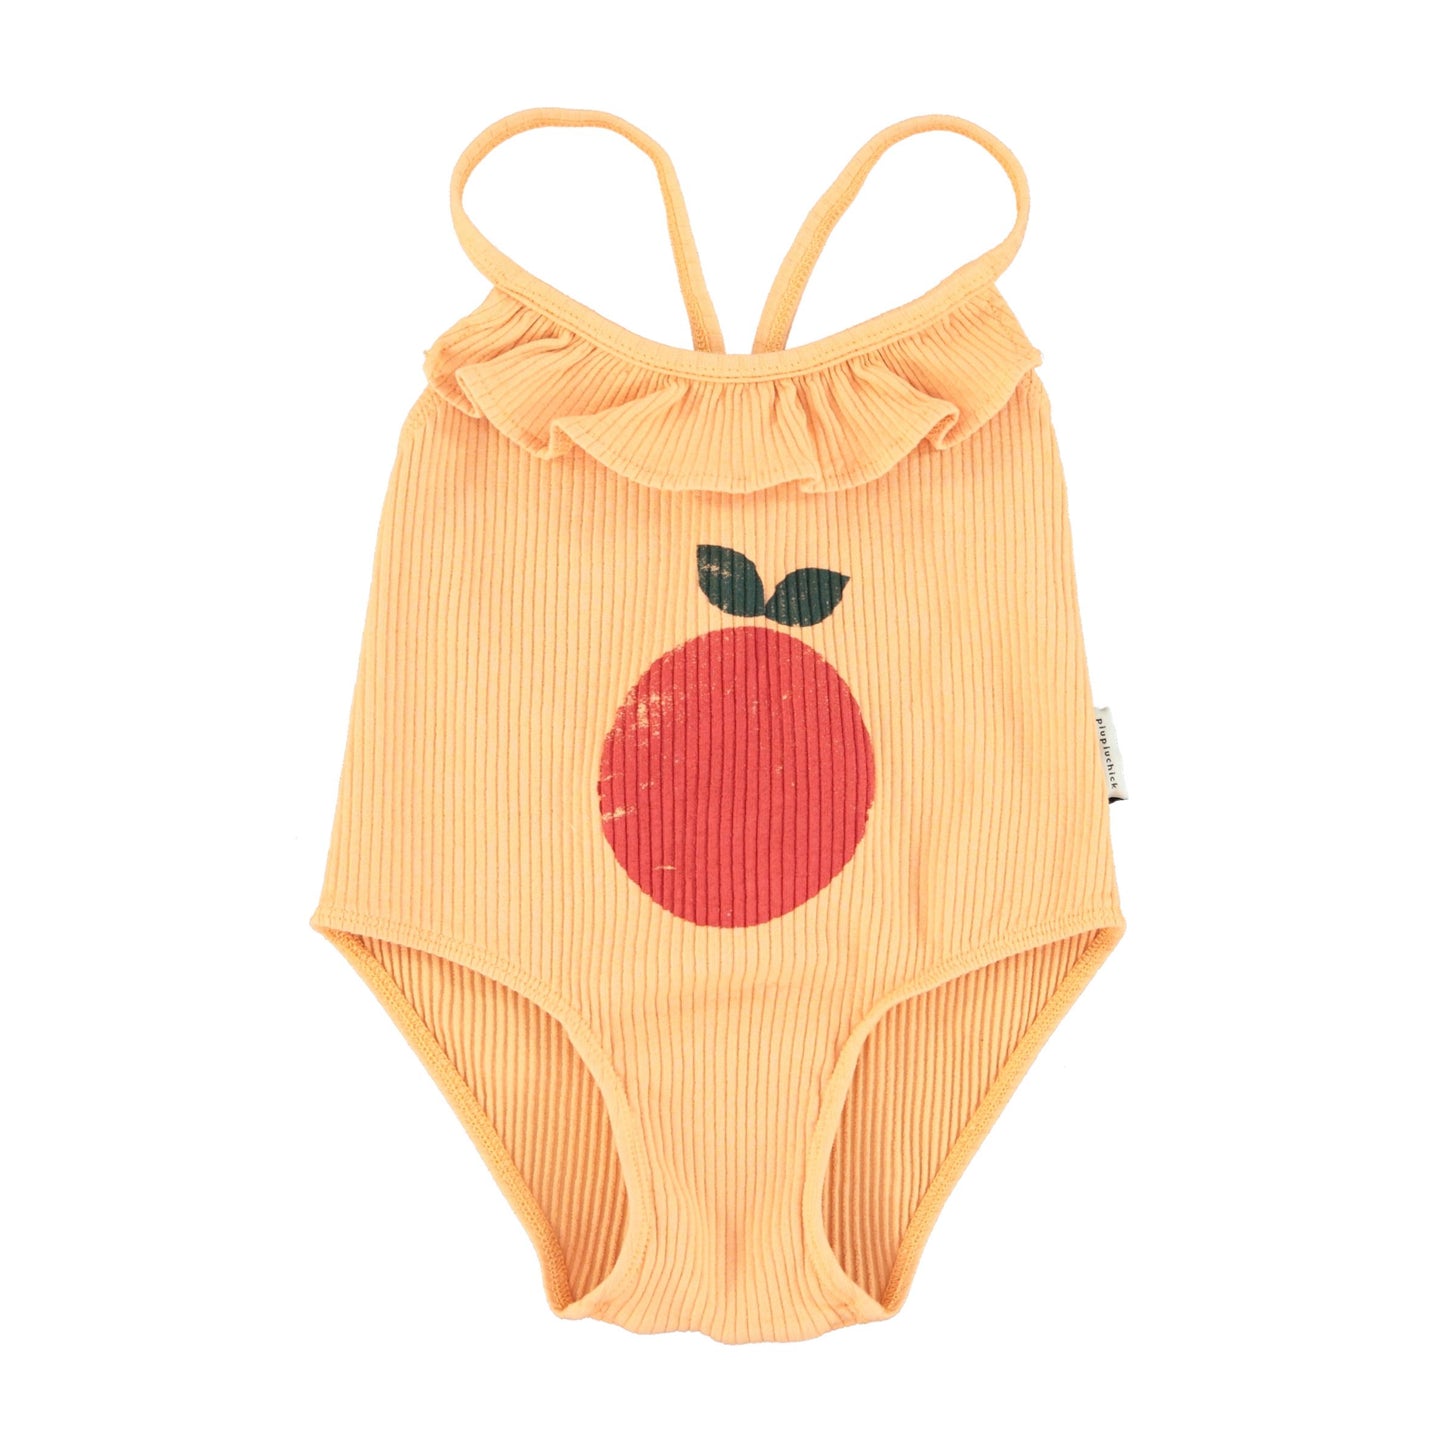 swimsuit w/ ruffles | peach w/ apple print